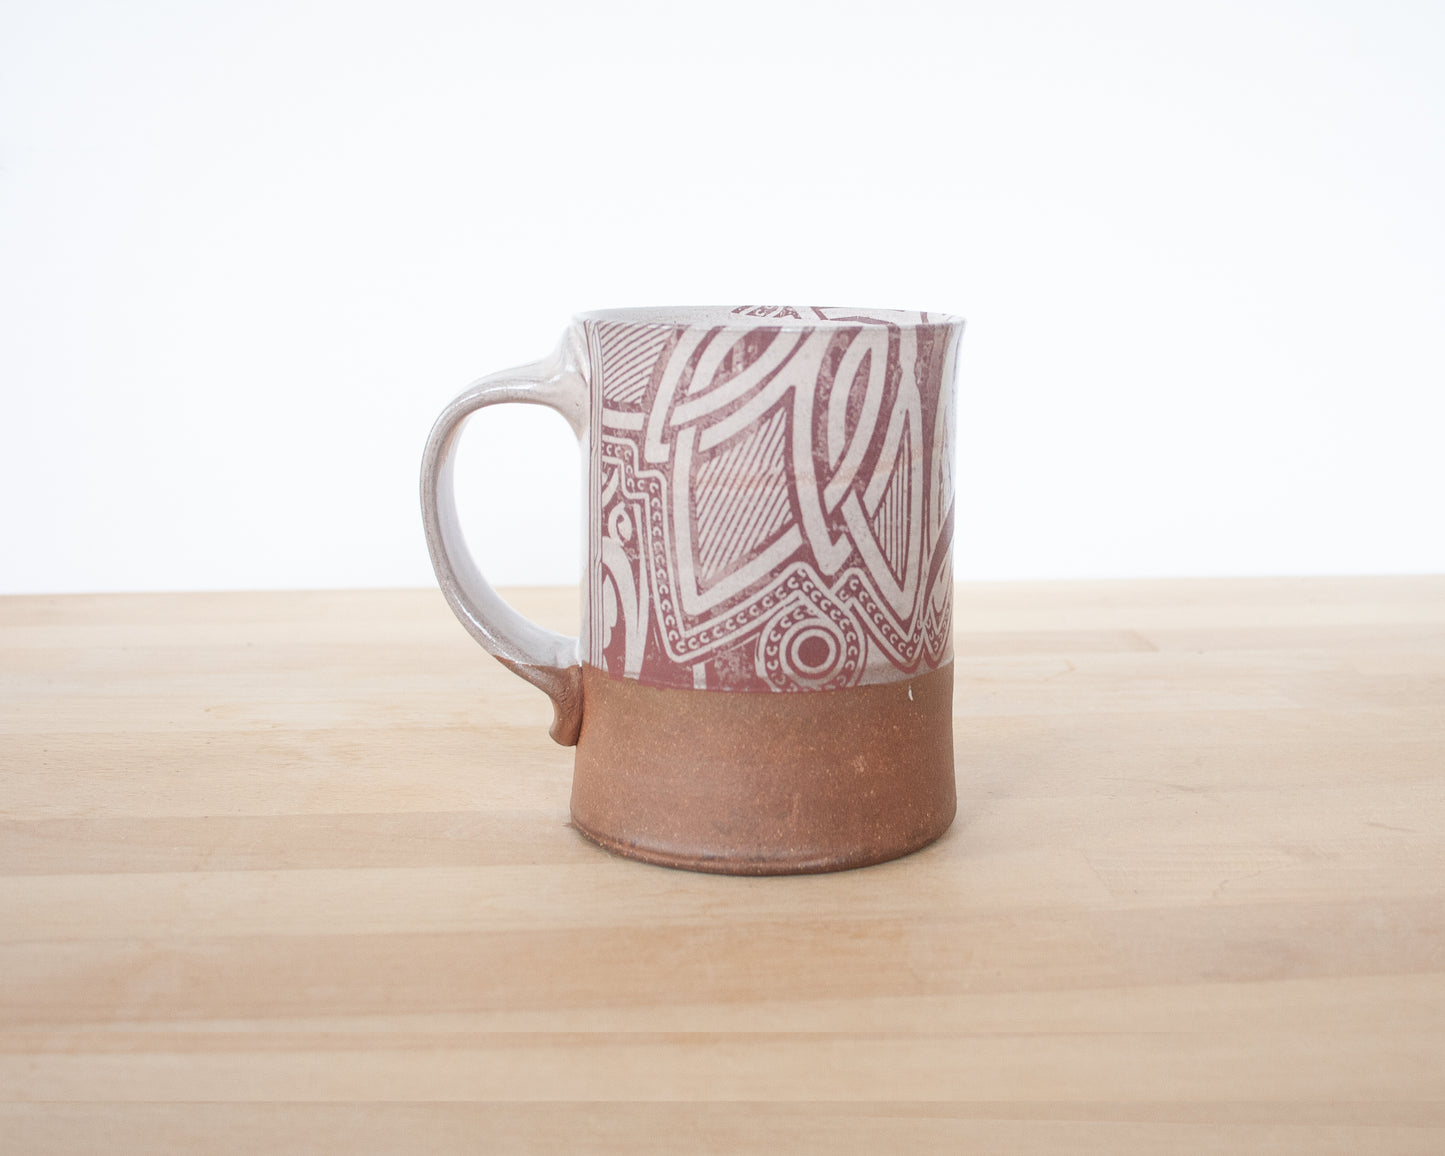 T-Rex Mug with background pattern - pale pink